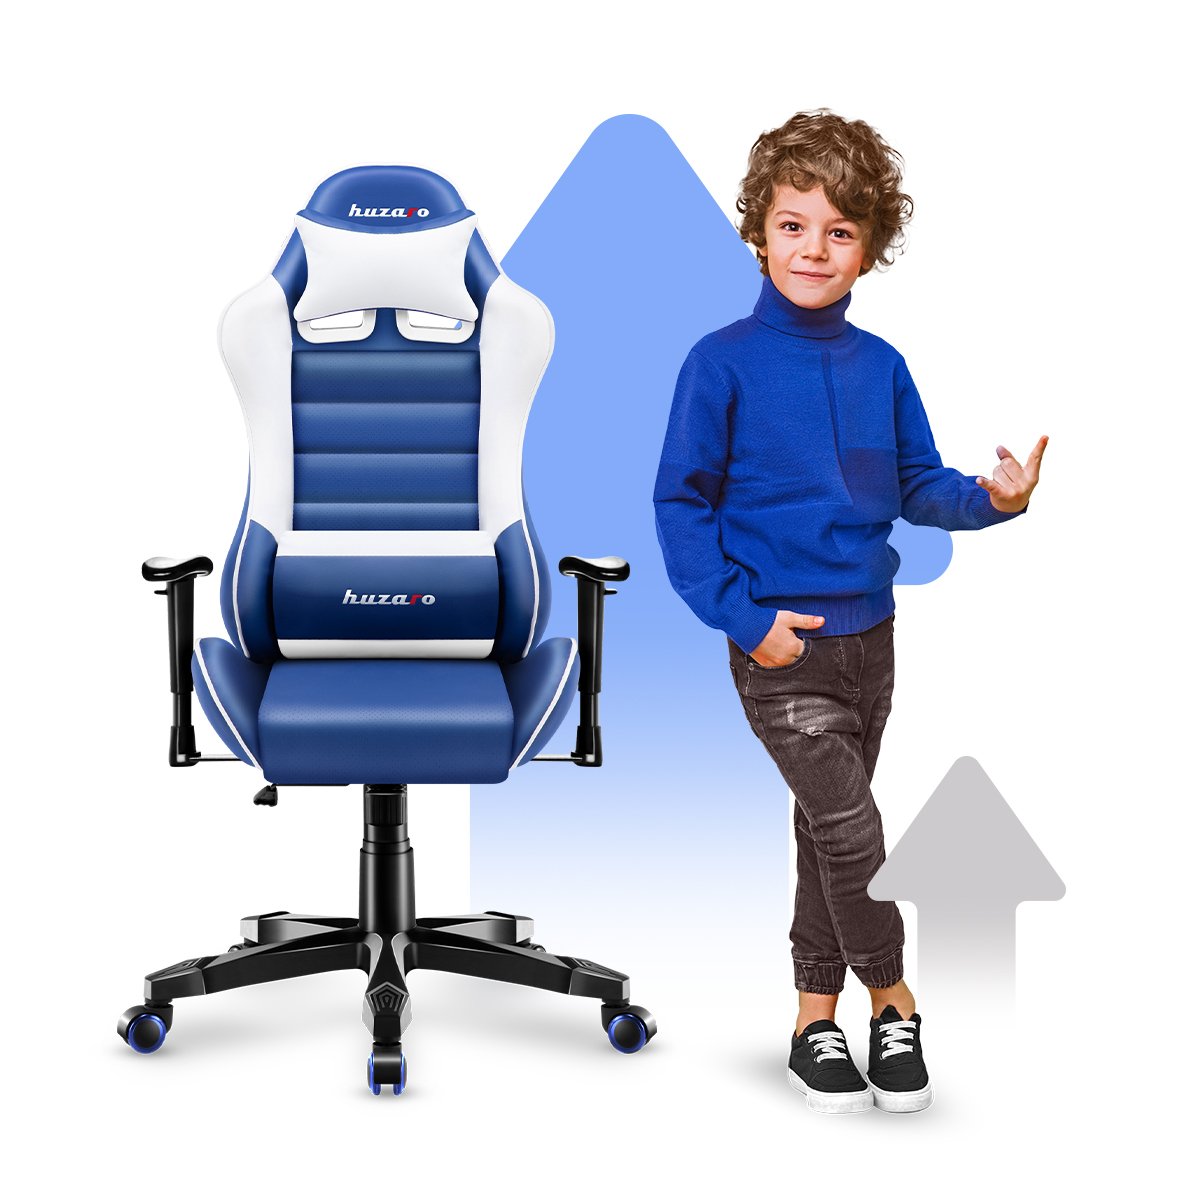 Fotel Ranger 6.0 Blue z dzieckiem